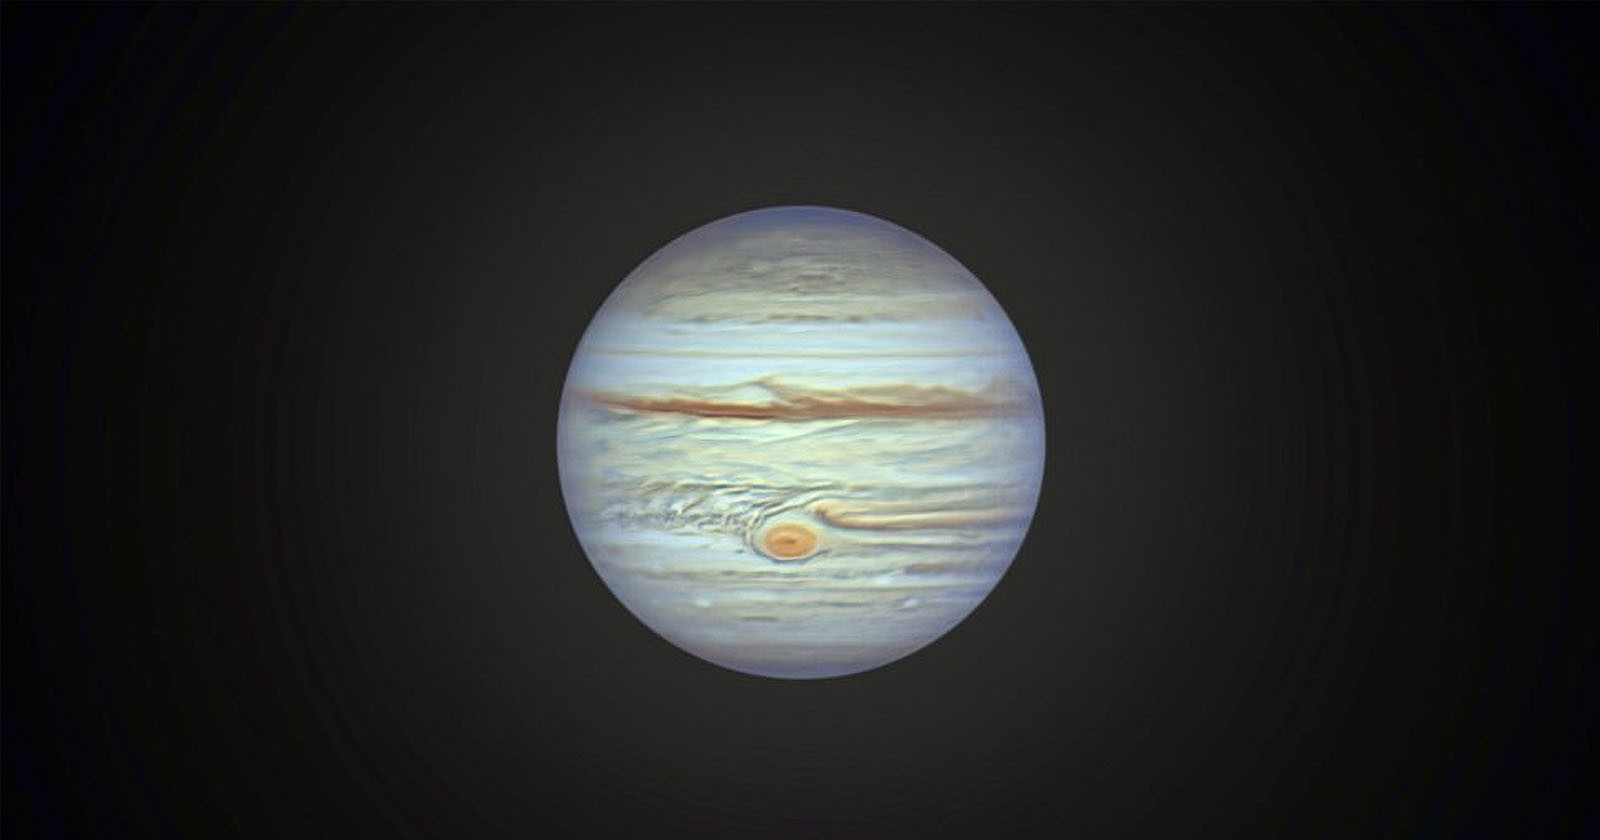  sensational jupiter image made 600 000 photos planet 